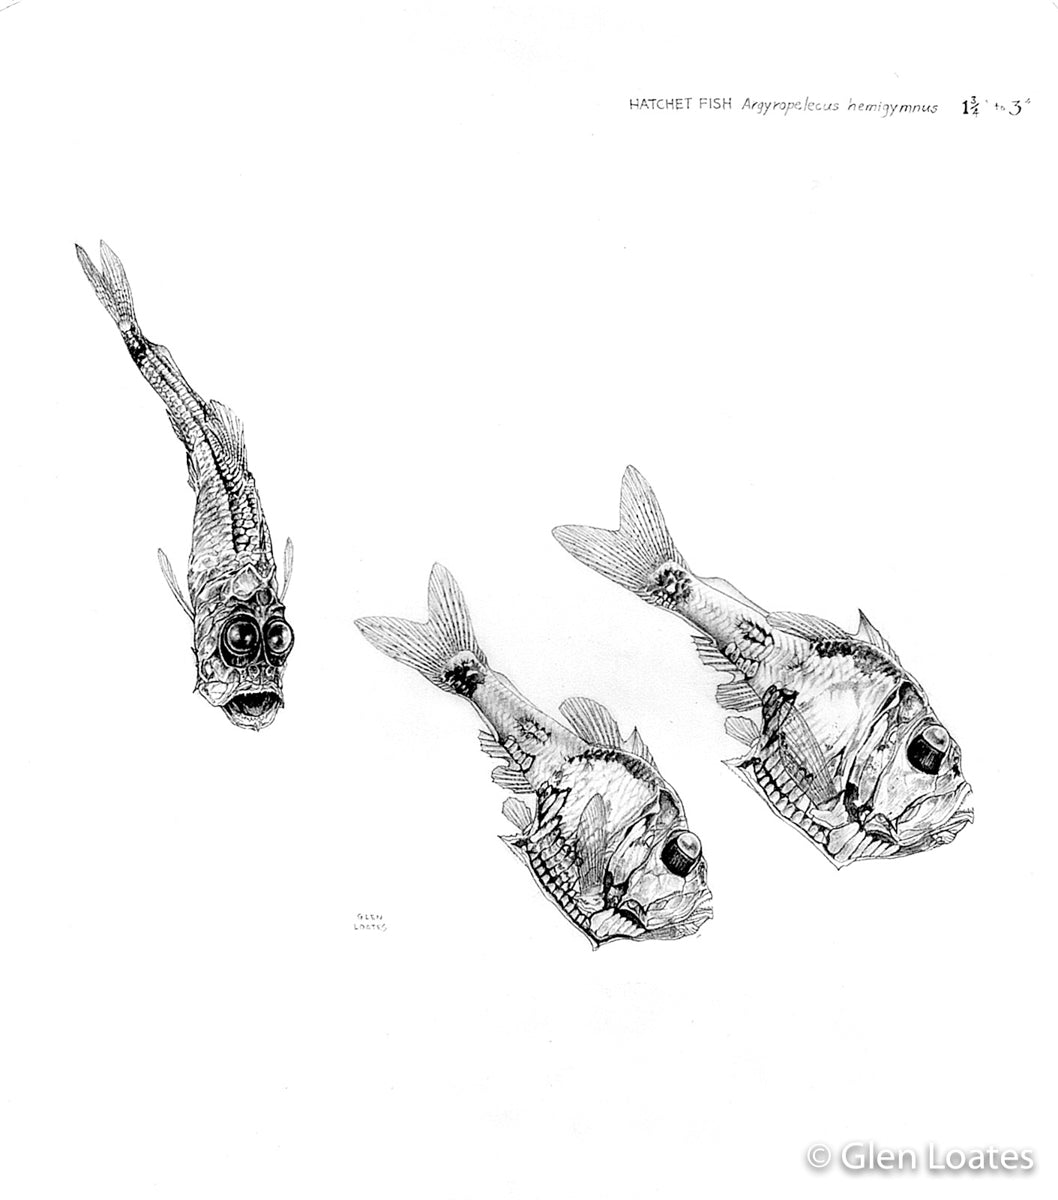 Hatchet Fish by Glen Loates